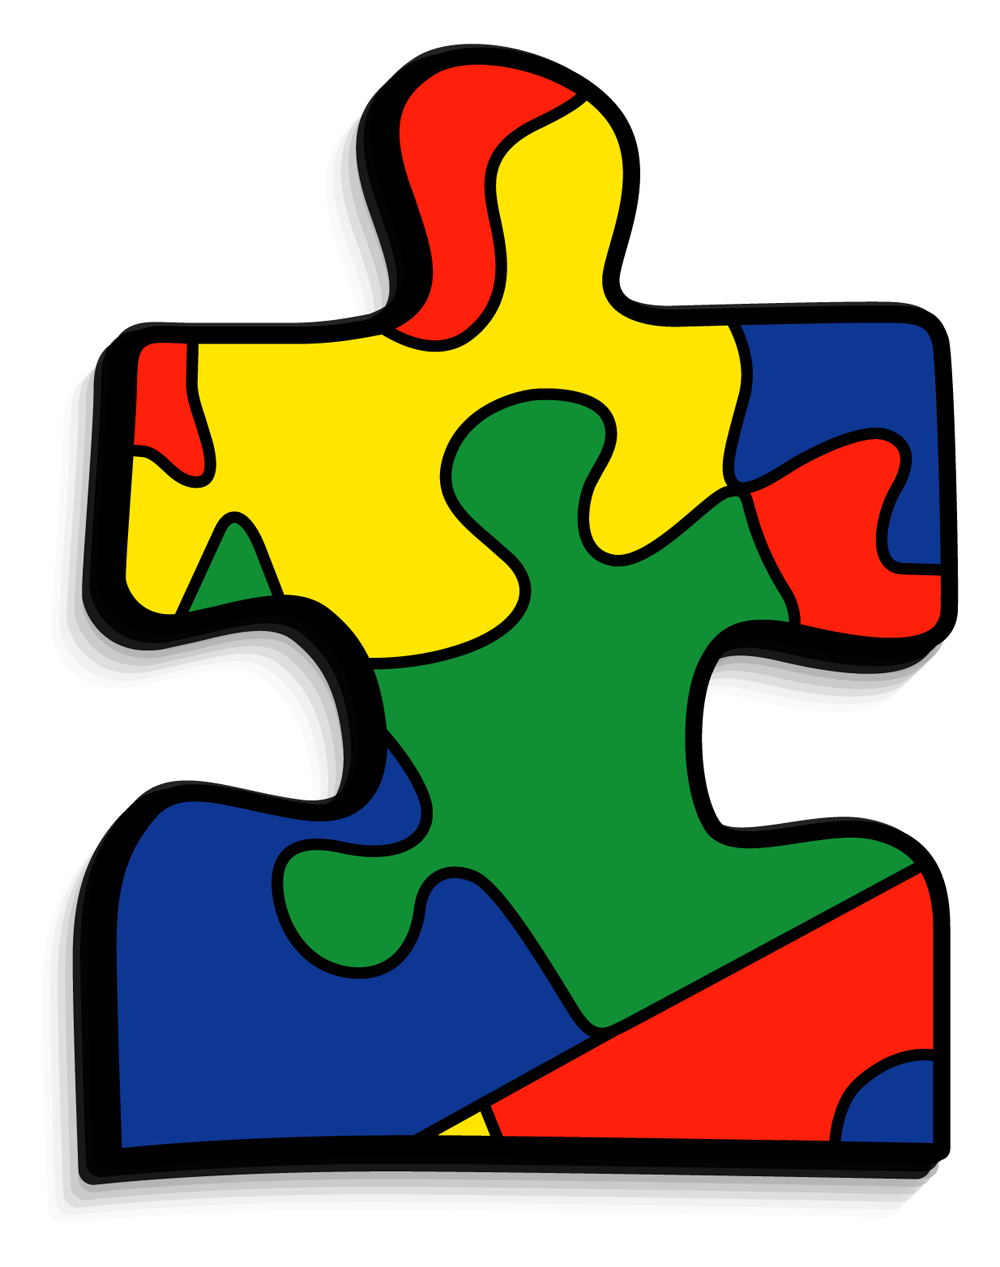 free-autism-symbol-cliparts-download-free-autism-symbol-cliparts-png-images-free-cliparts-on